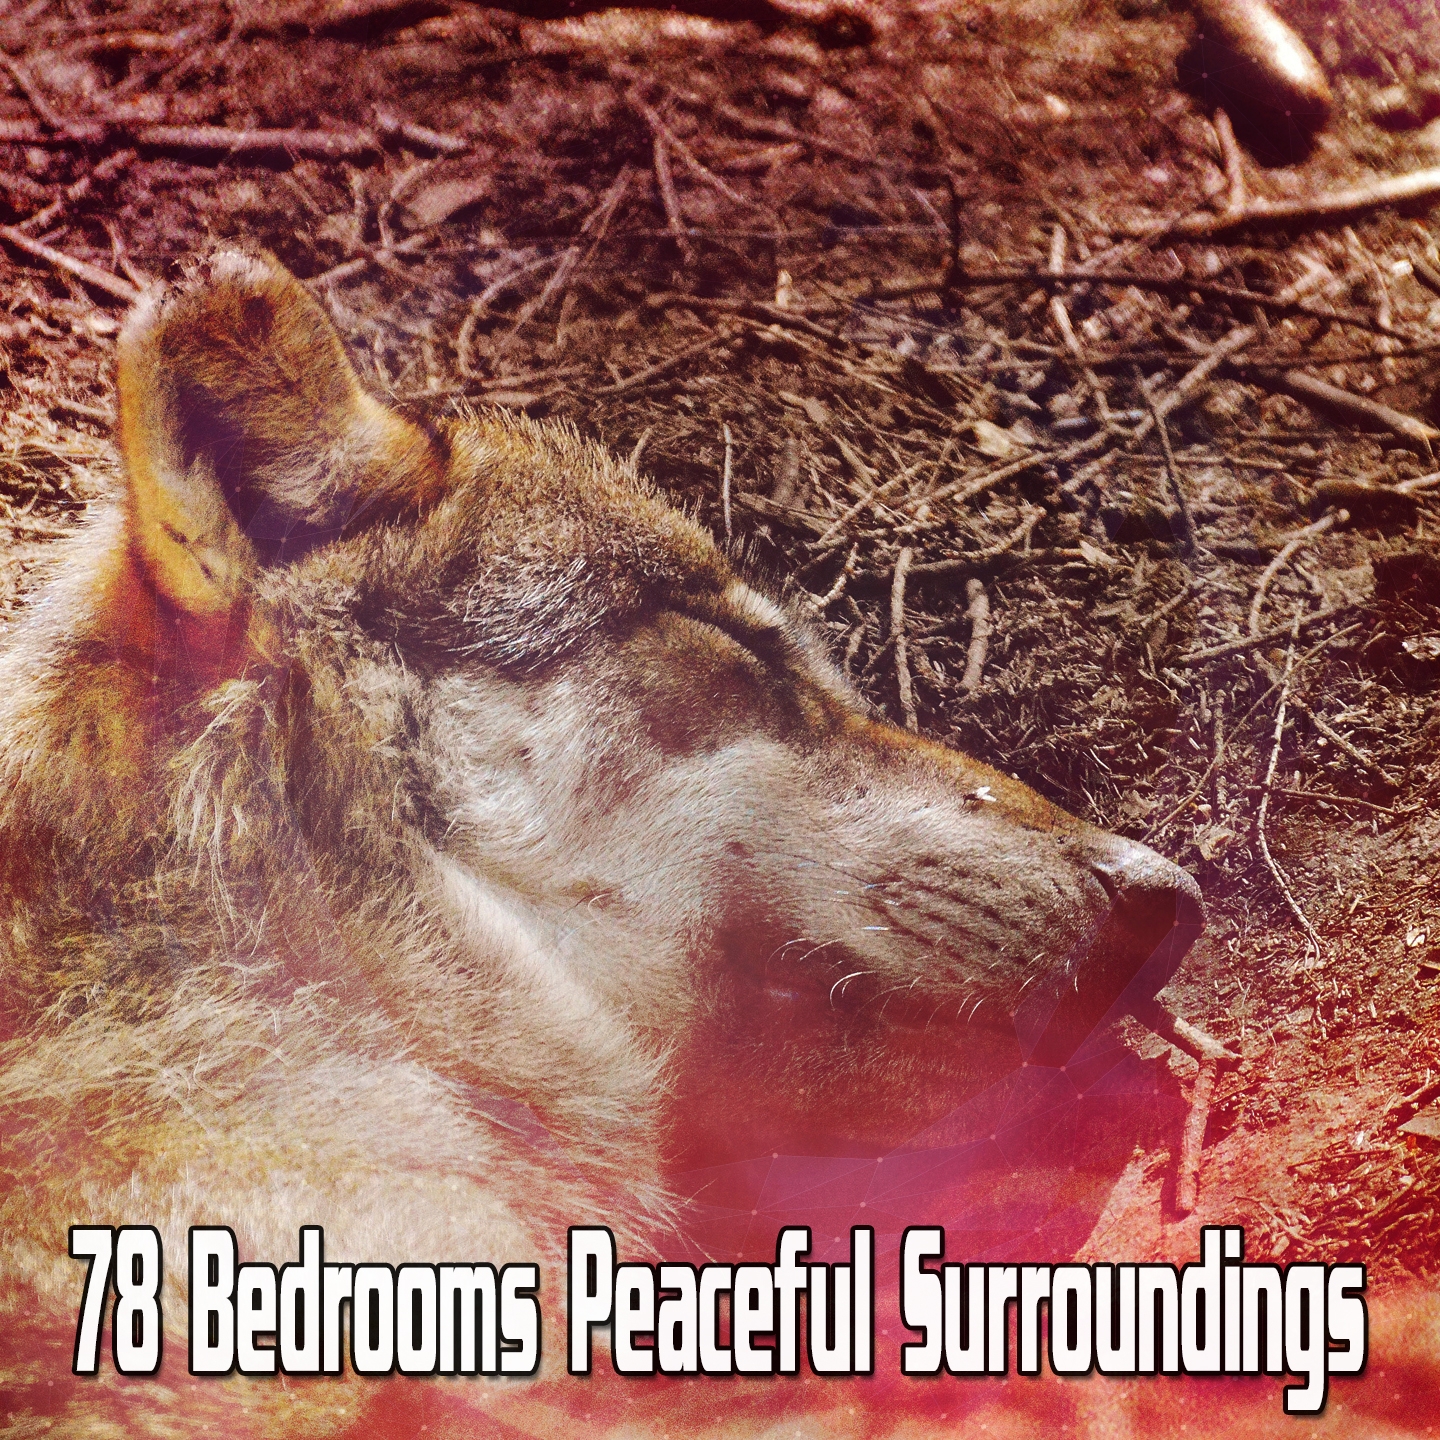 78 Bedrooms Peaceful Surroundings